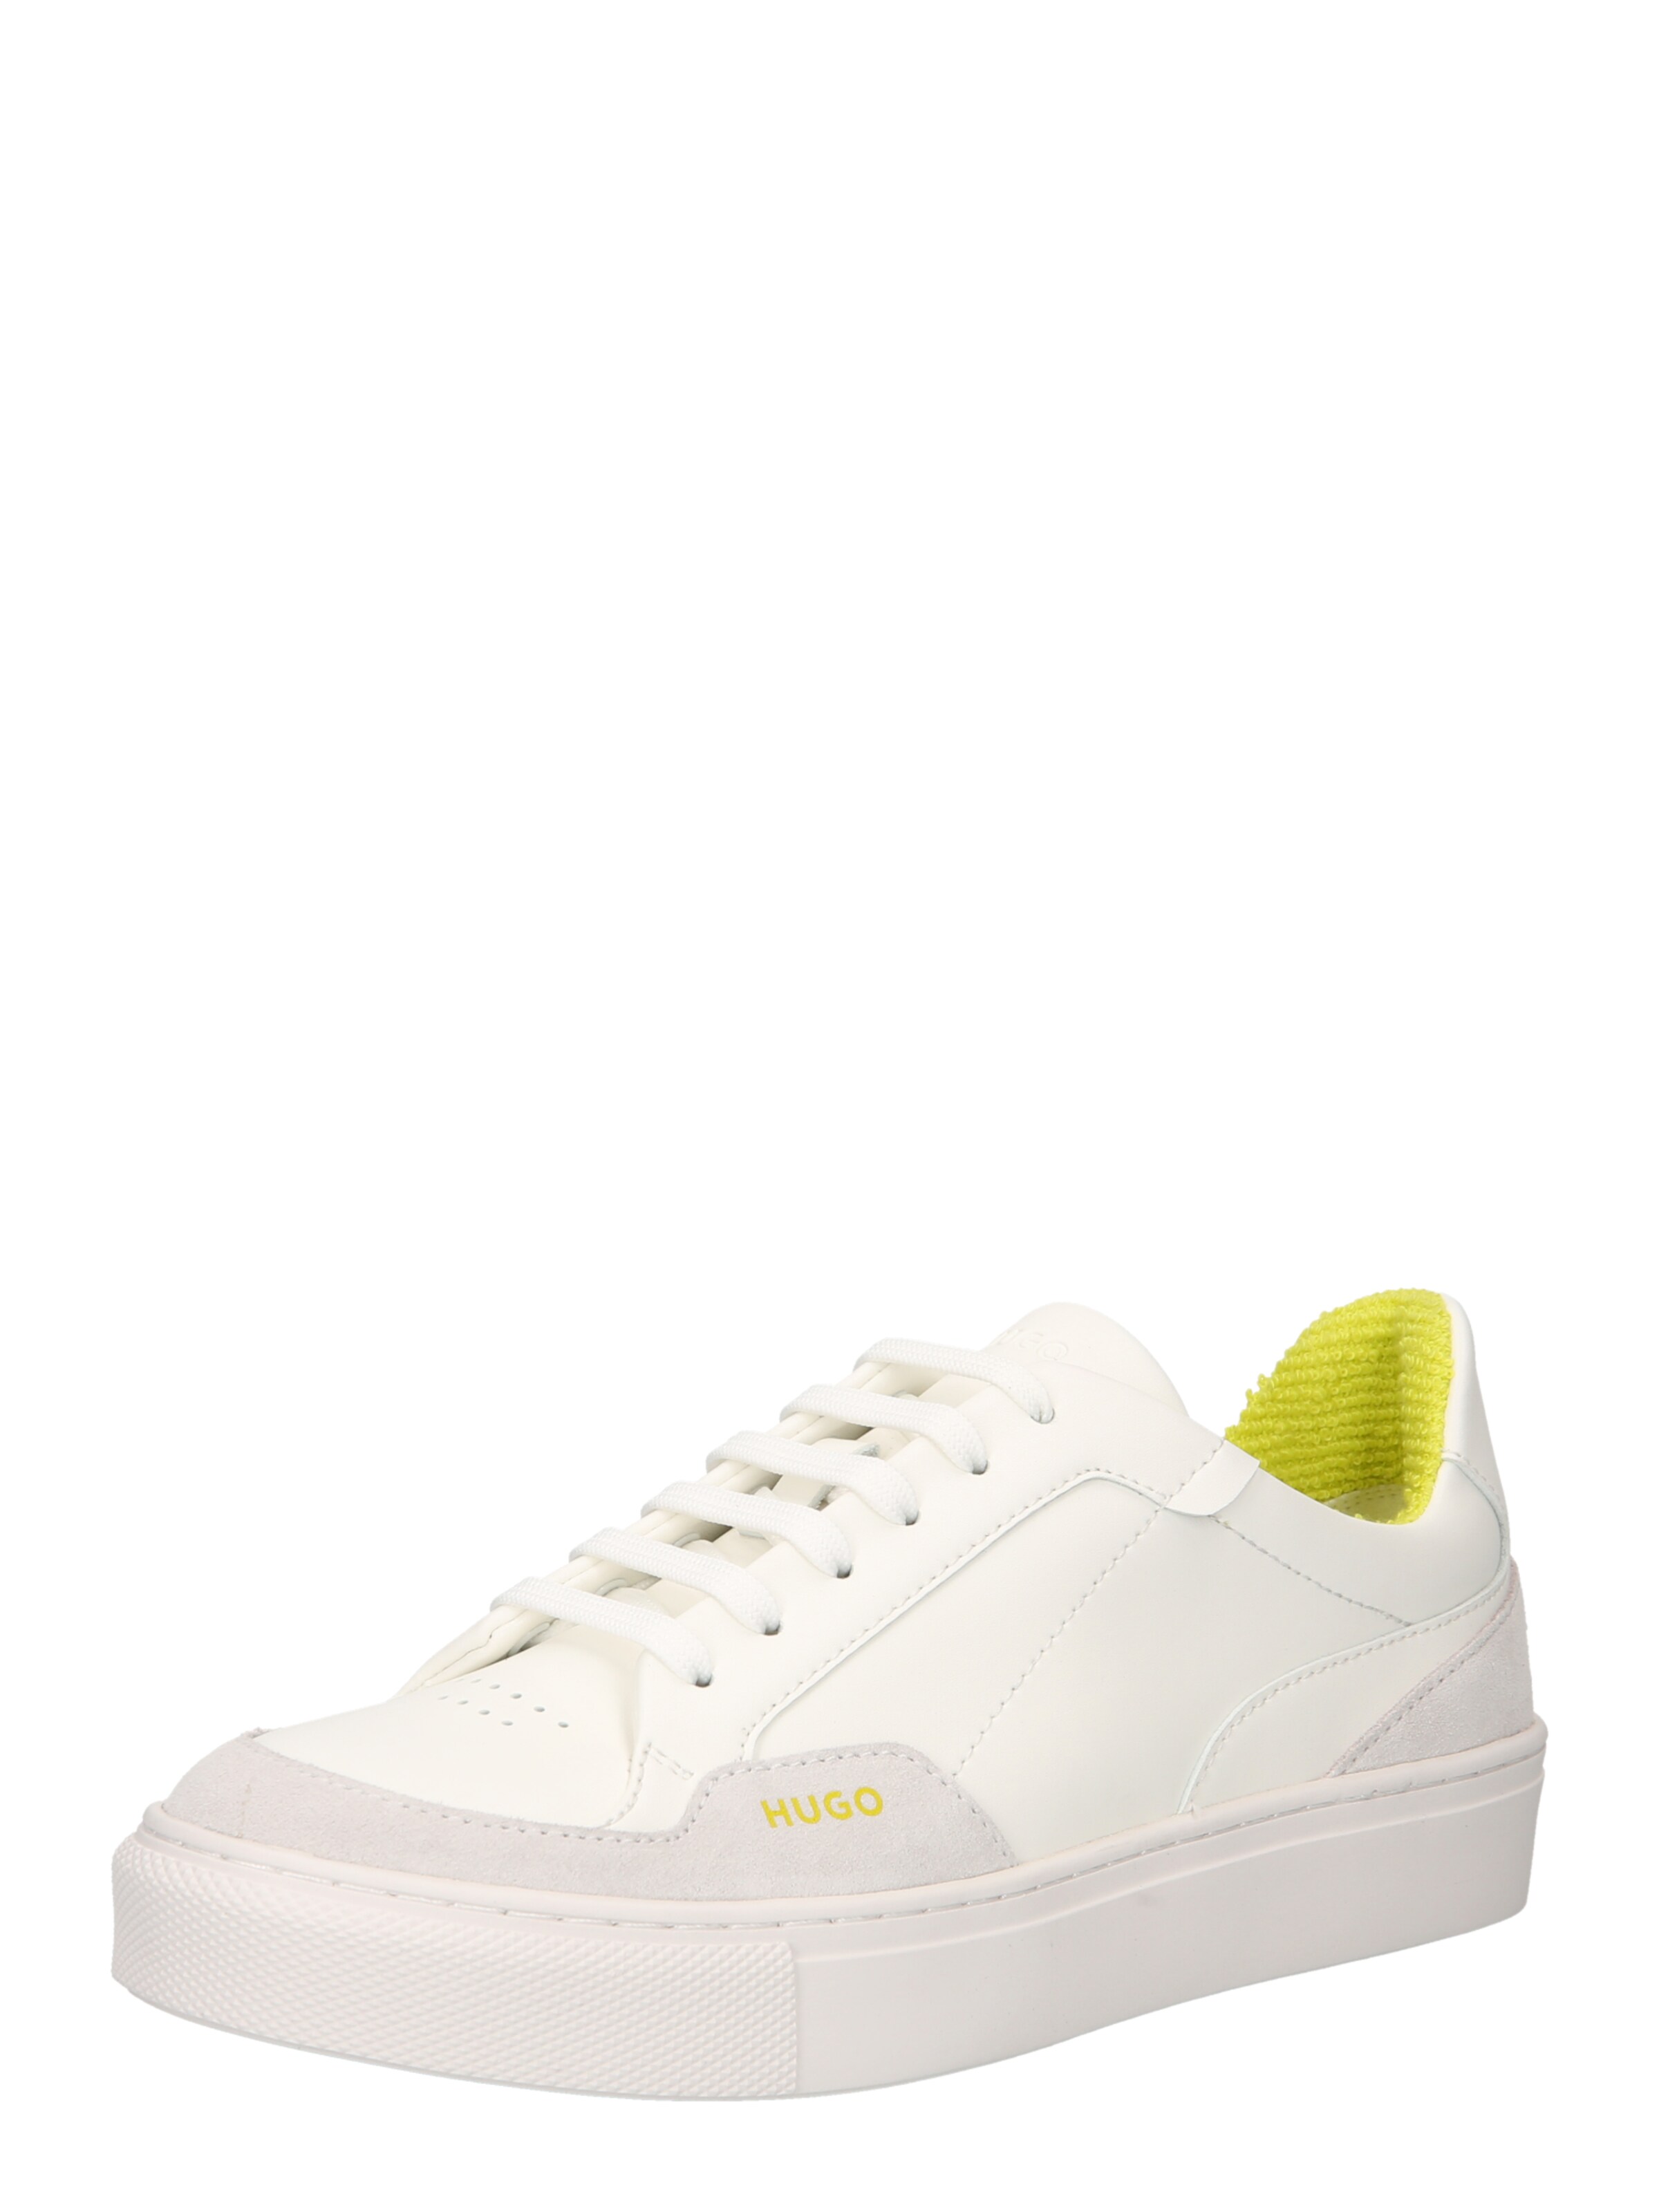 Frauen Sneaker HUGO Sneaker 'Hannah' in Weiß, Offwhite - WU56739